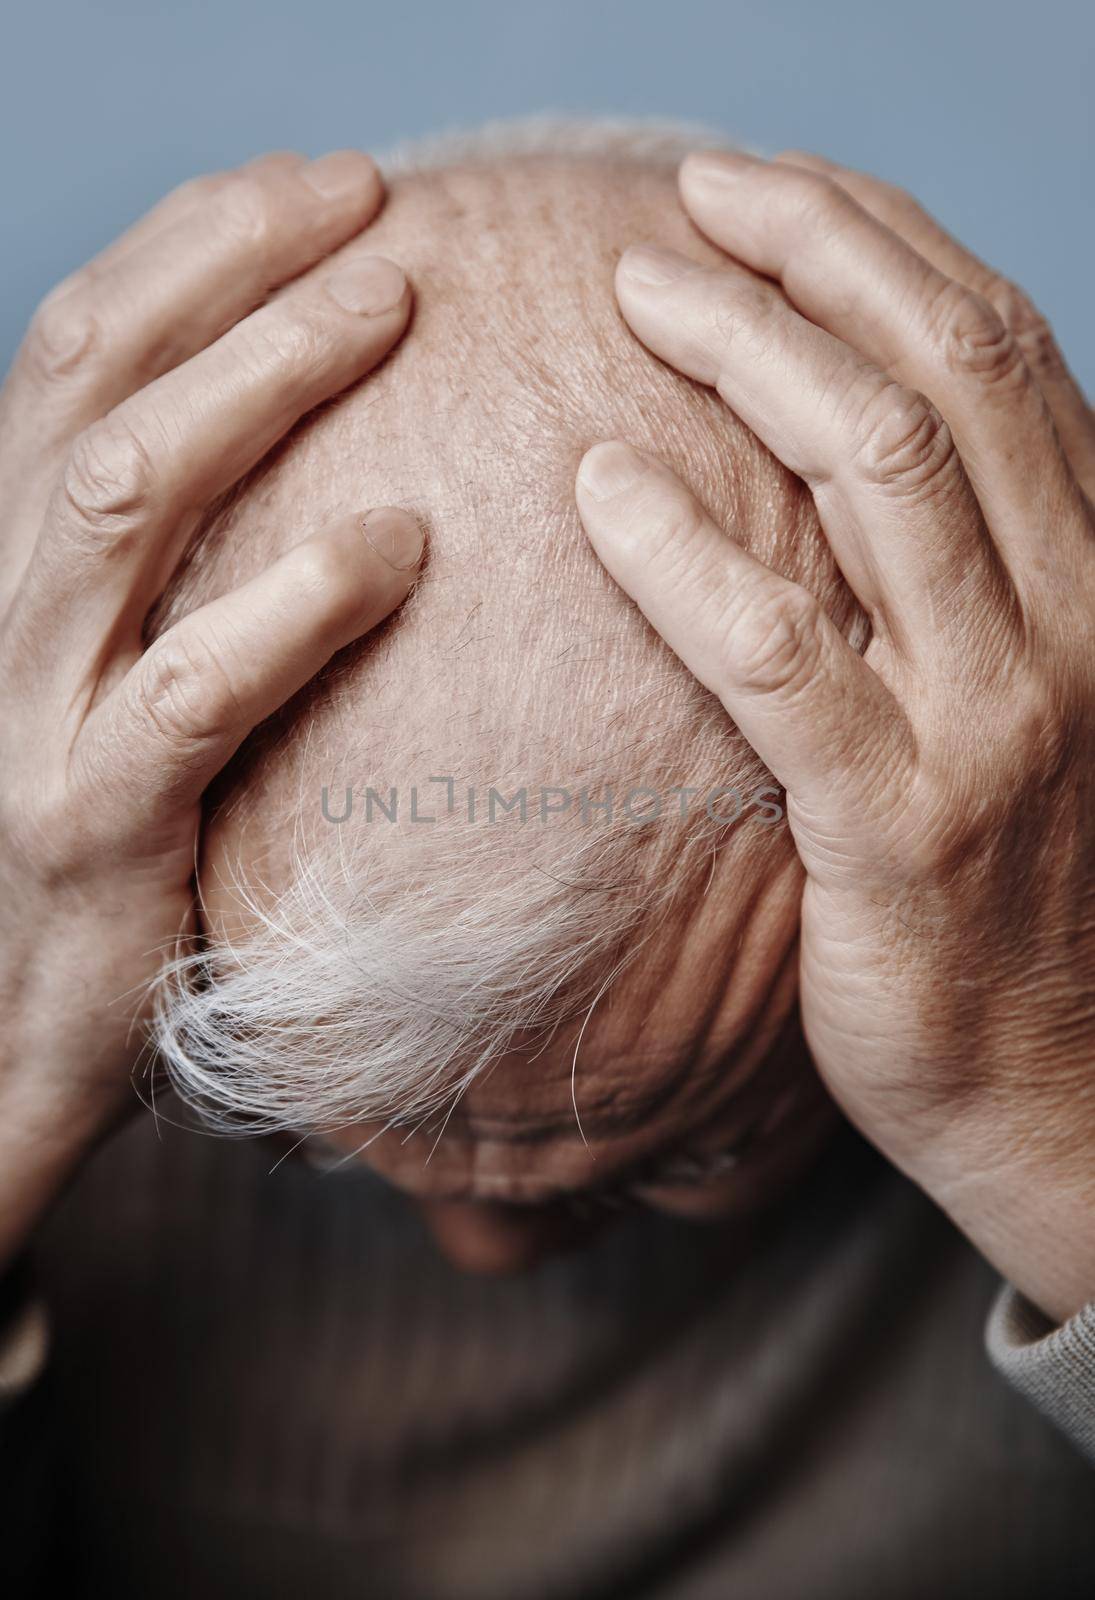 Senior man holding her head in pain while feeling headache